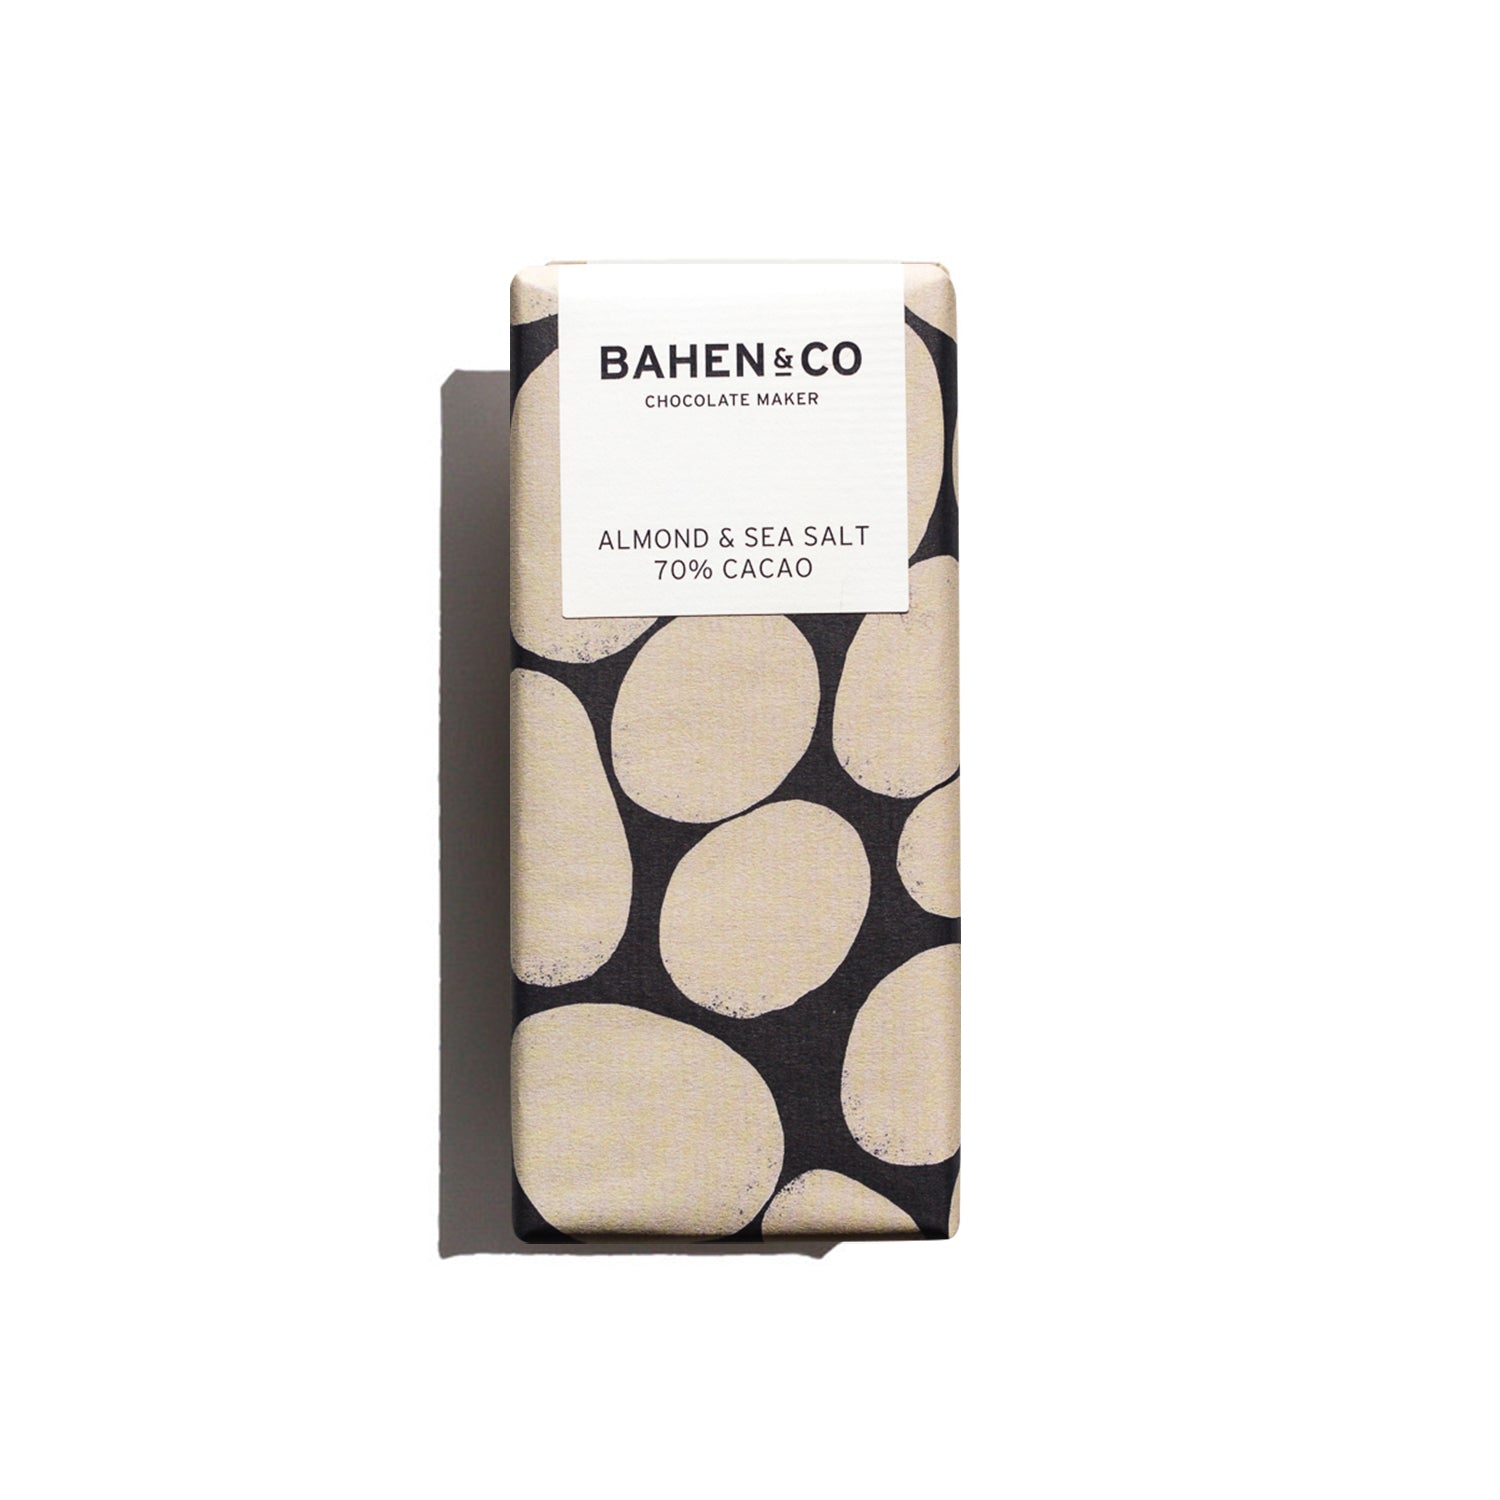 Bahen & Co Chocolate - Almond & Sea Salt